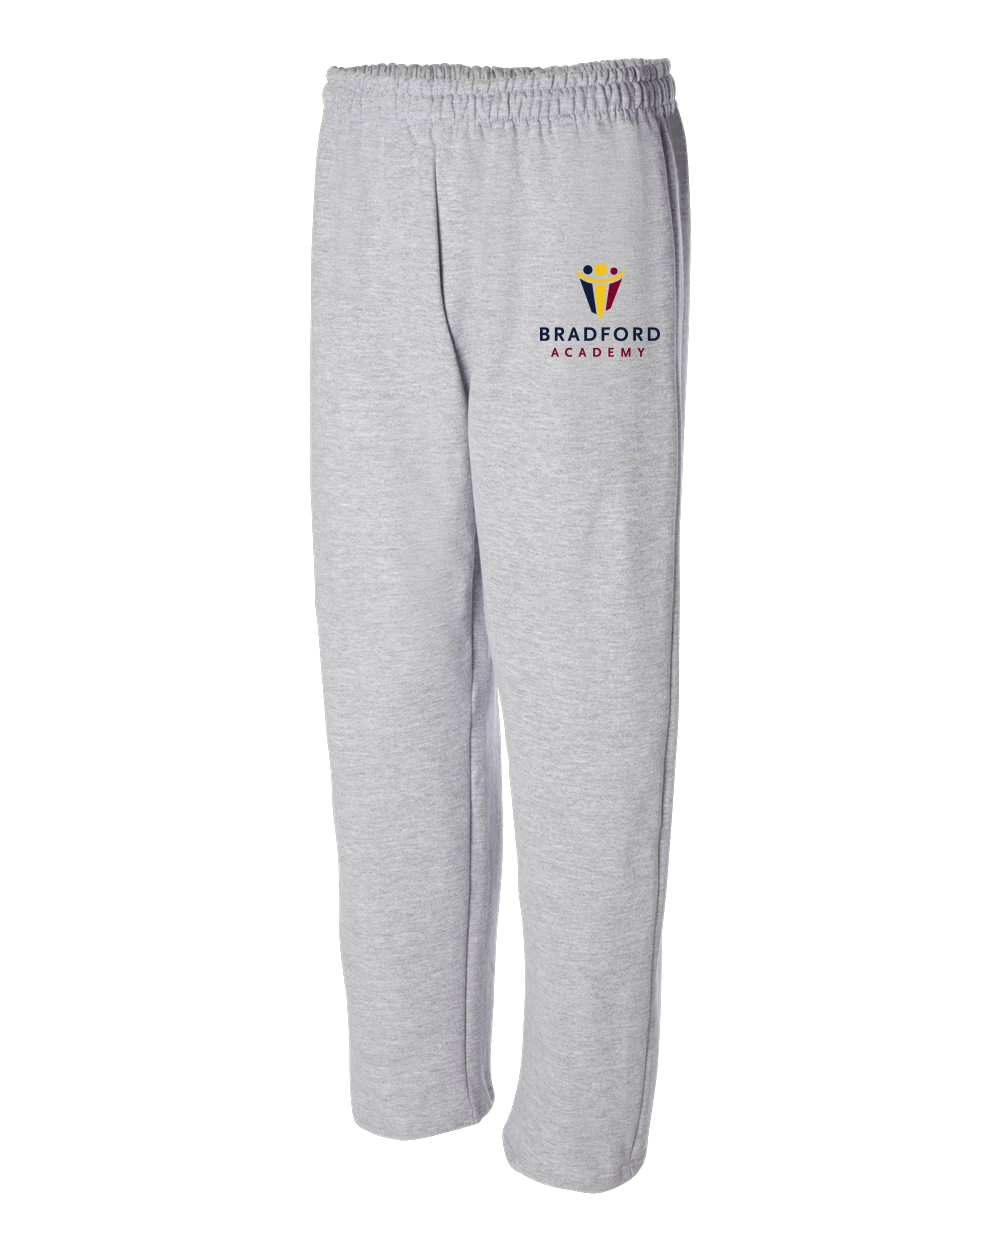 Adult Open Bottom Sweatpants Grey Bradford Academy Embroidered Logo Light Sweatpant